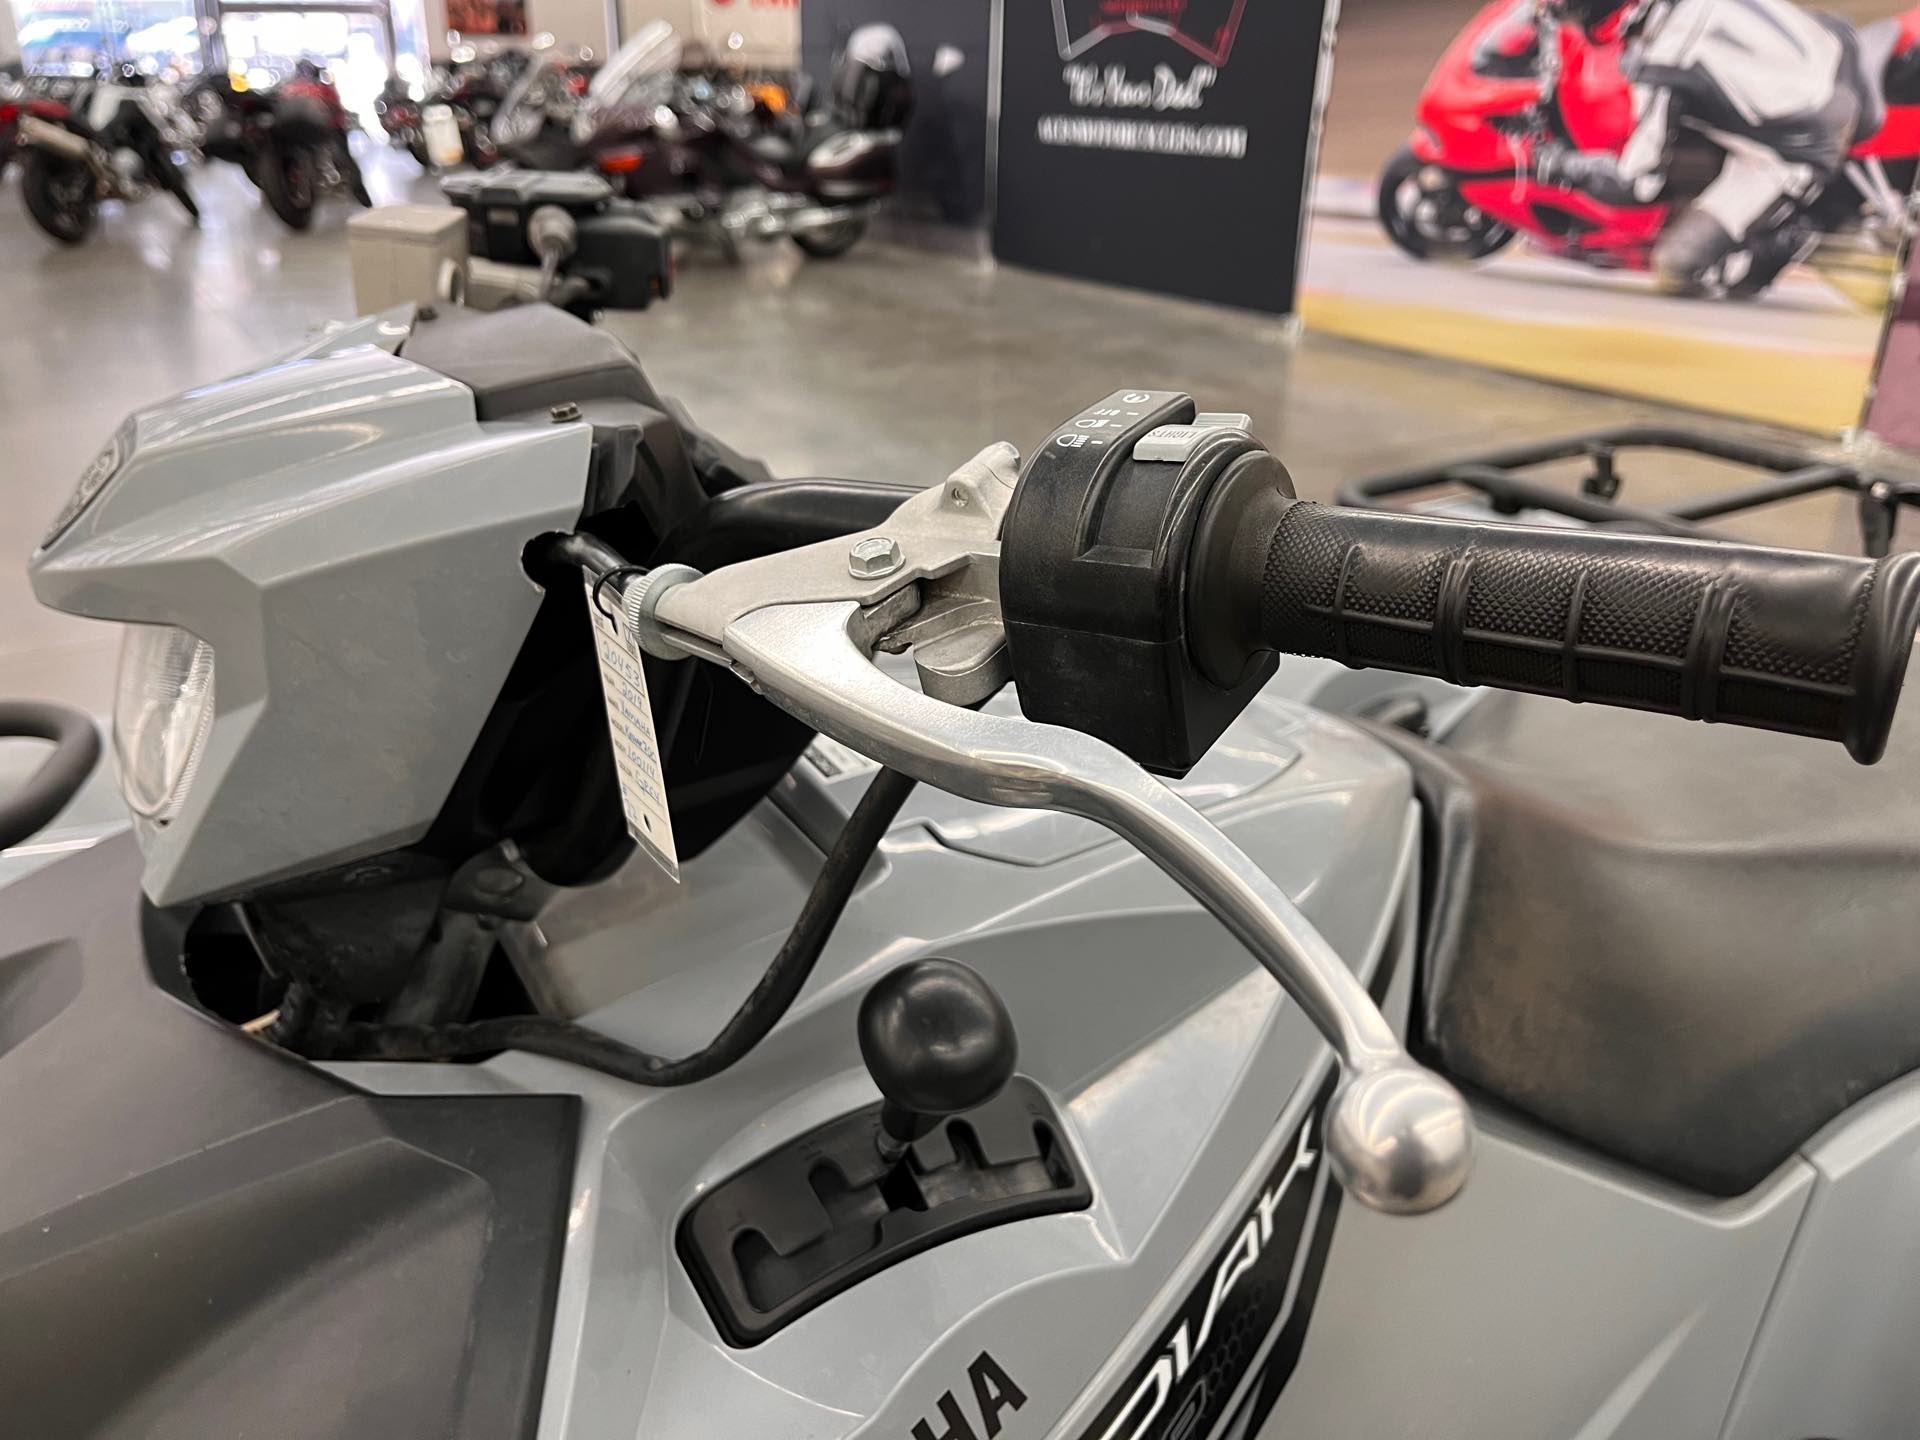 2019 Yamaha Kodiak 700 EPS at Aces Motorcycles - Denver